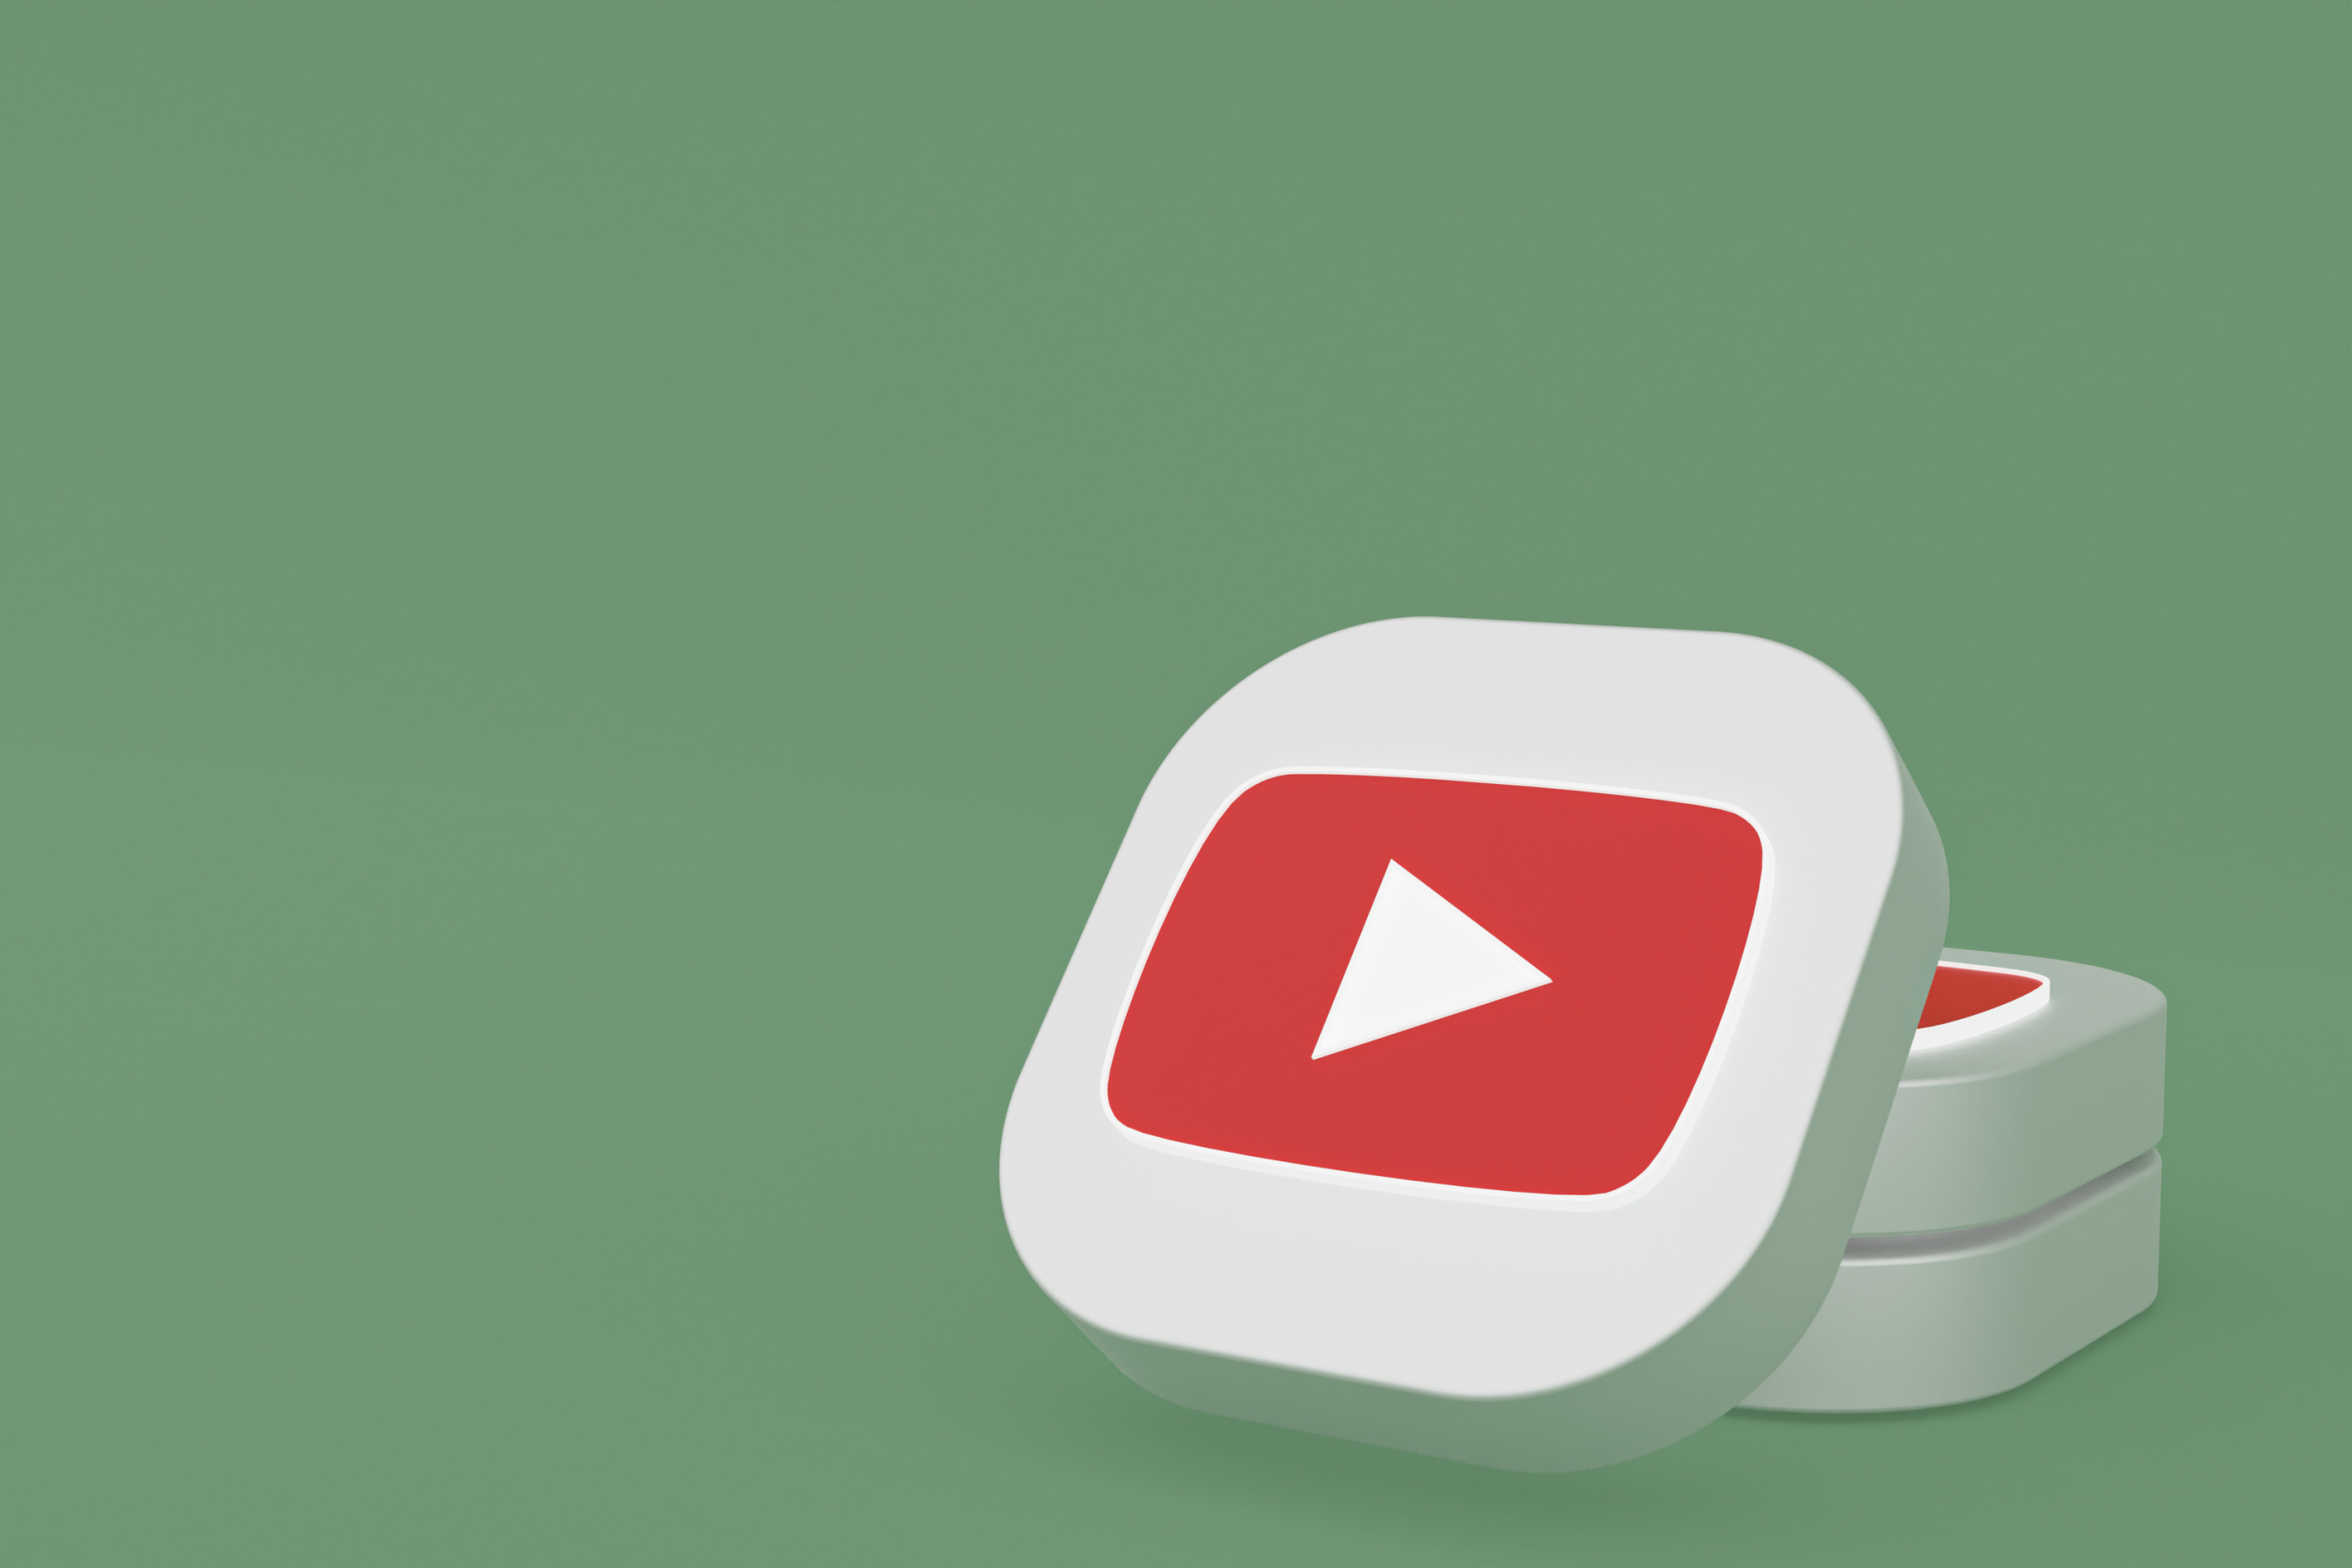 youtube-application-logo-3d-rendering-green-background.jpg